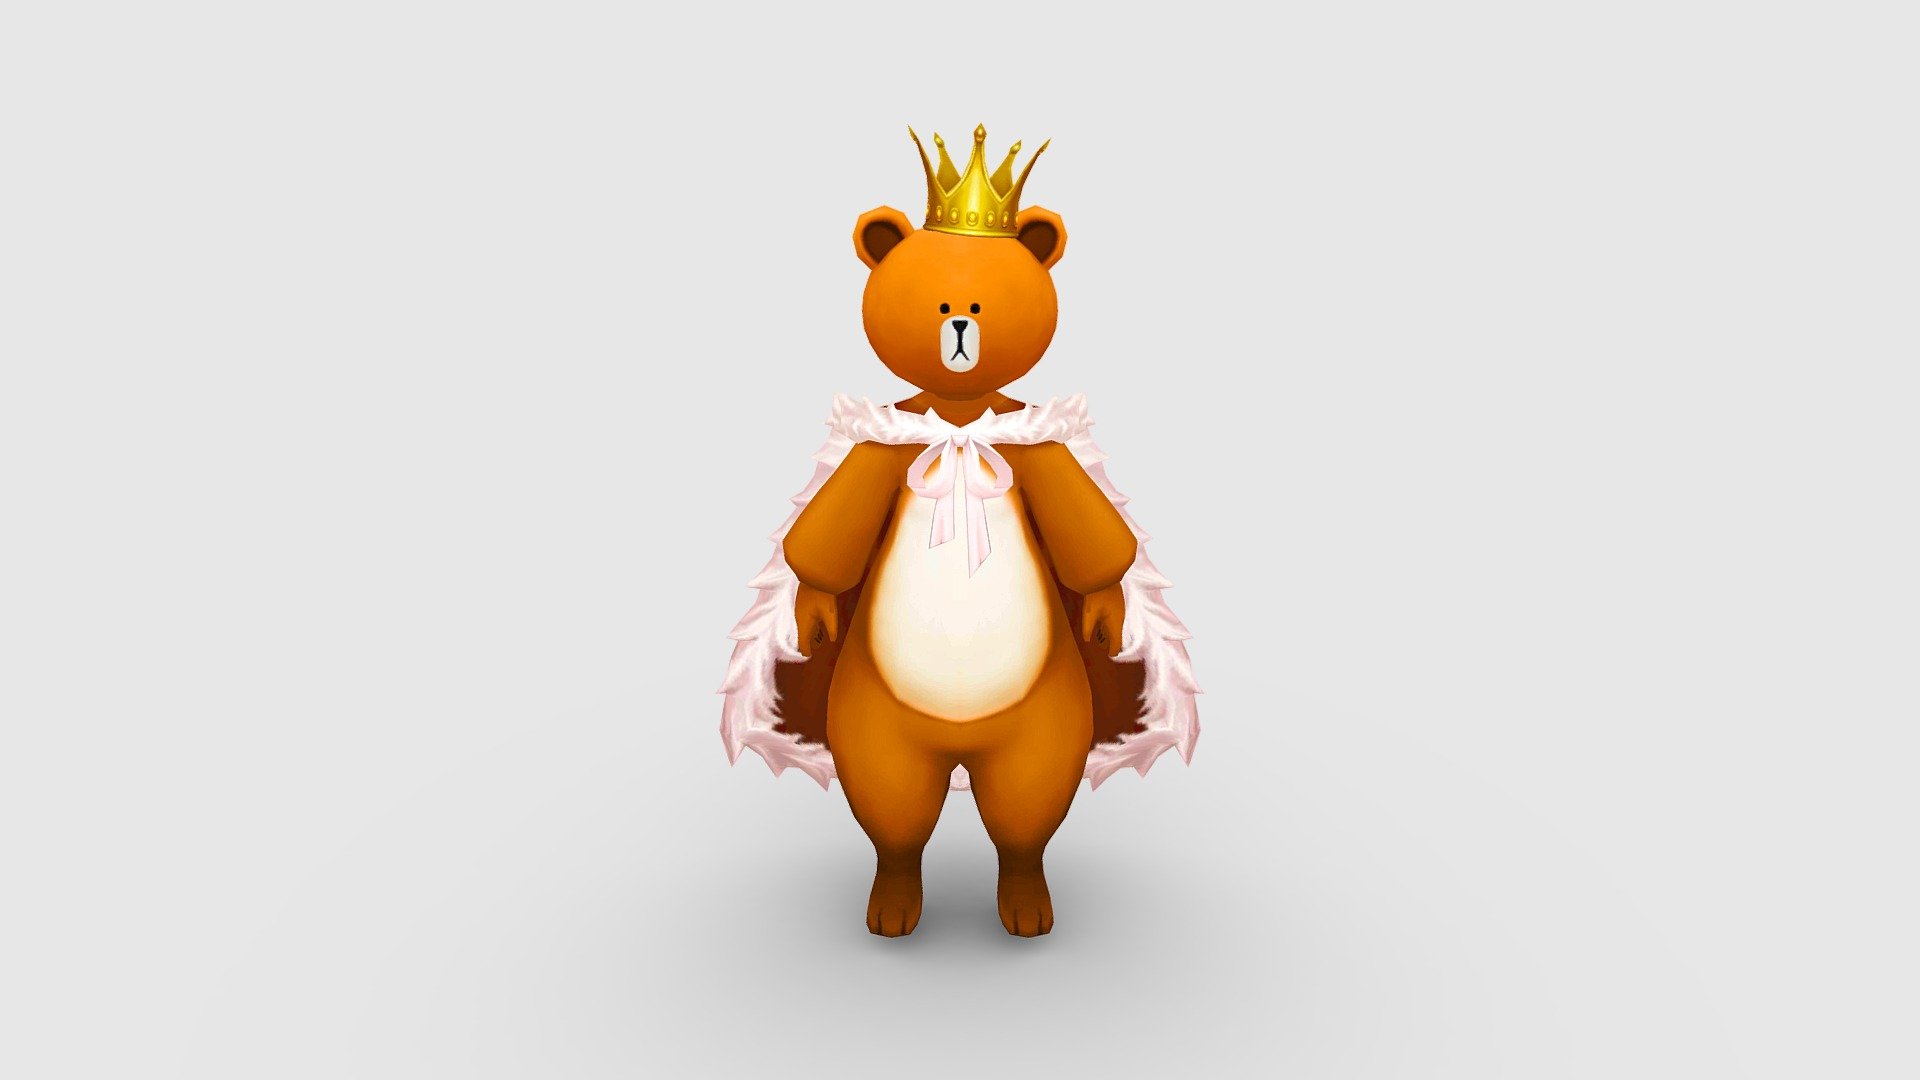 Cartoon Bear King costume - cosplay Low-poly 3D model - Cartoon Bear King costume - cosplay - 3D model by ler_cartoon (@lerrrrr) 3d model